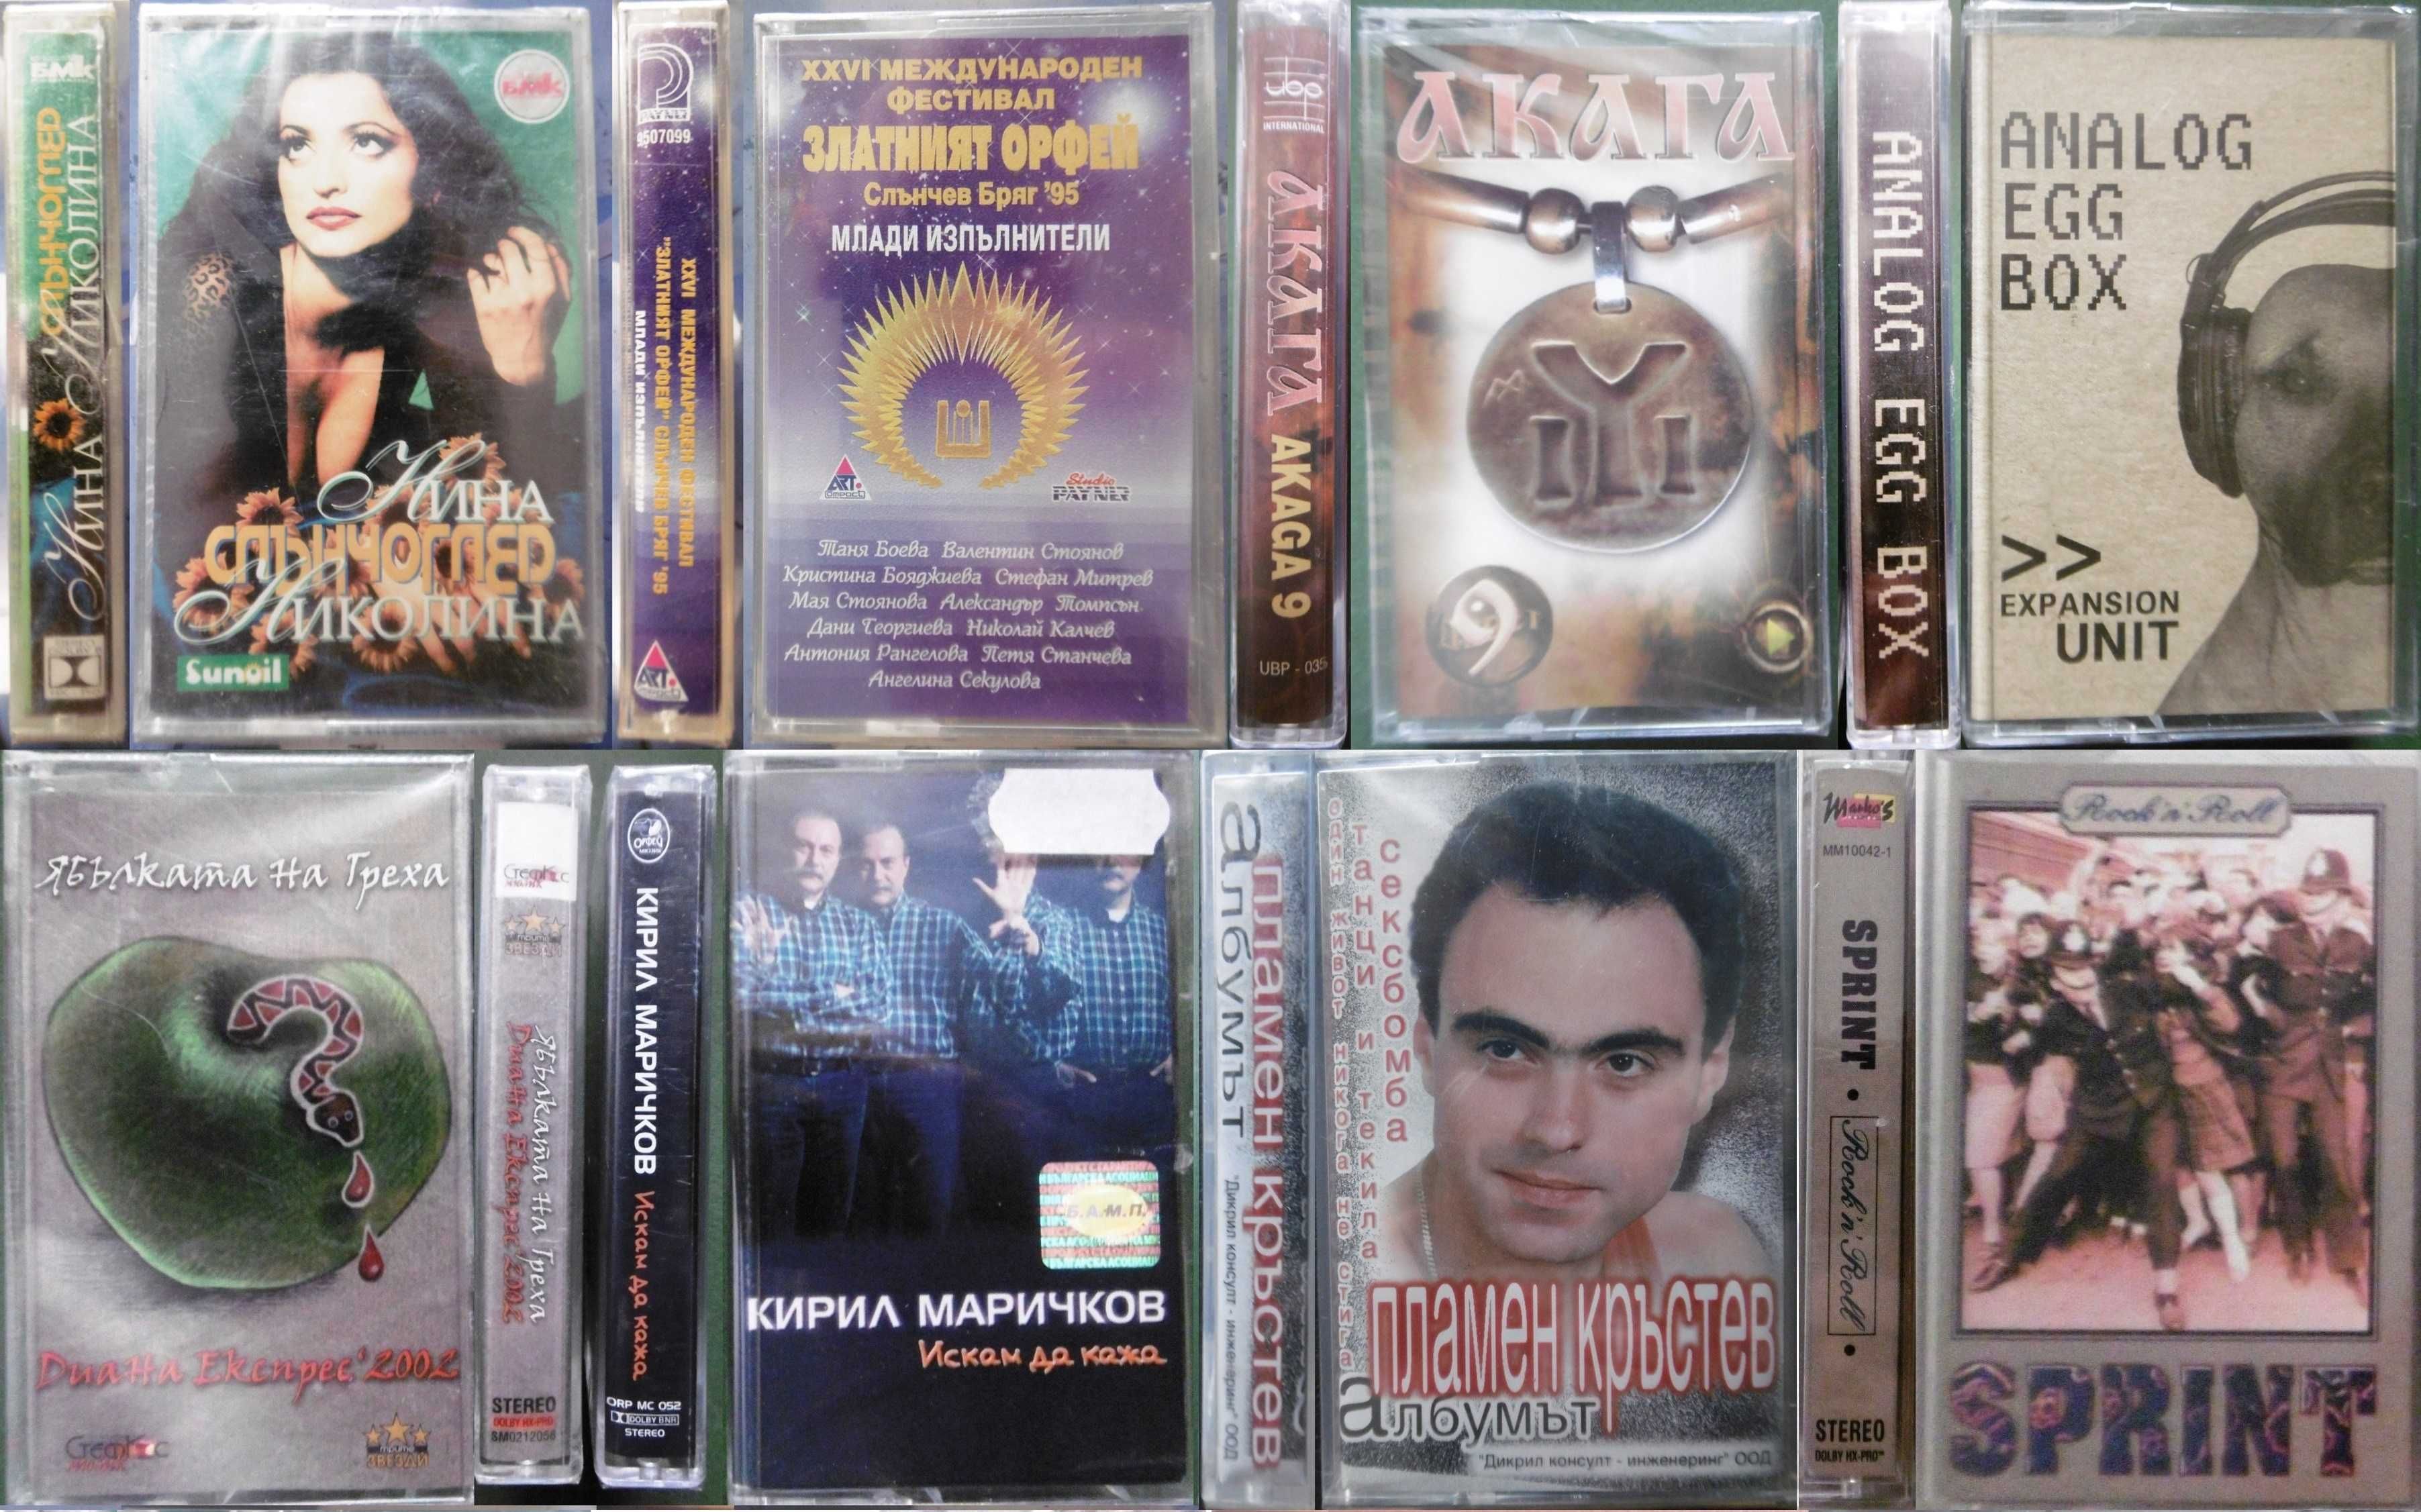 Ценна българска музика на аудио касети.